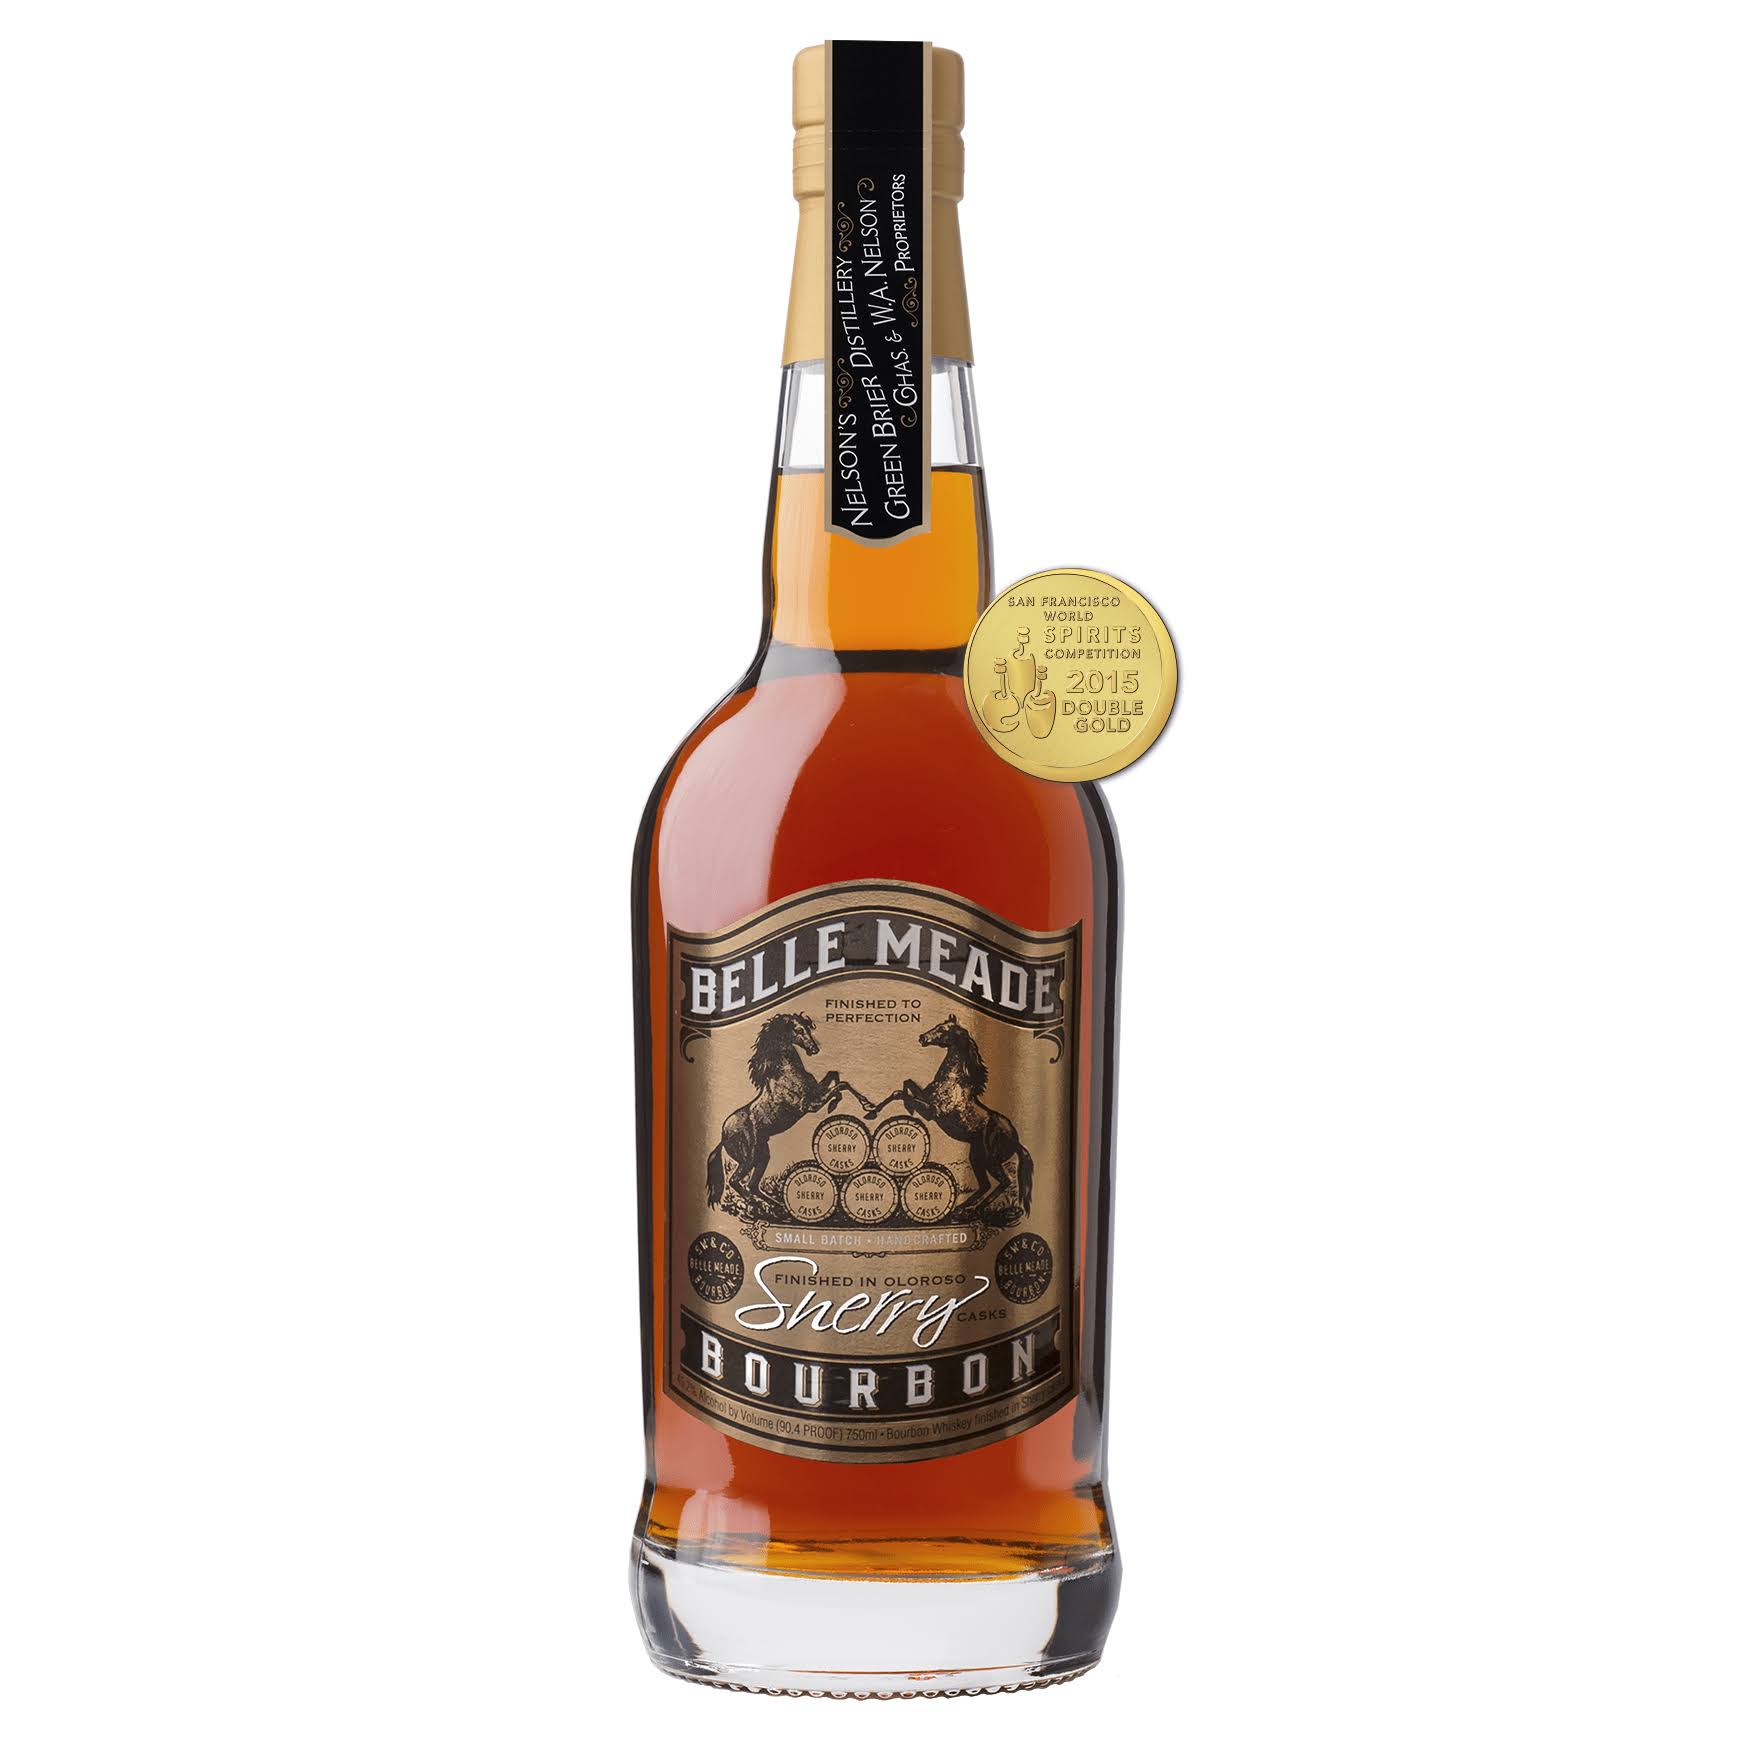 Belle Meade Sherry Cask Bourbon Whiskey - 750 ml bottle